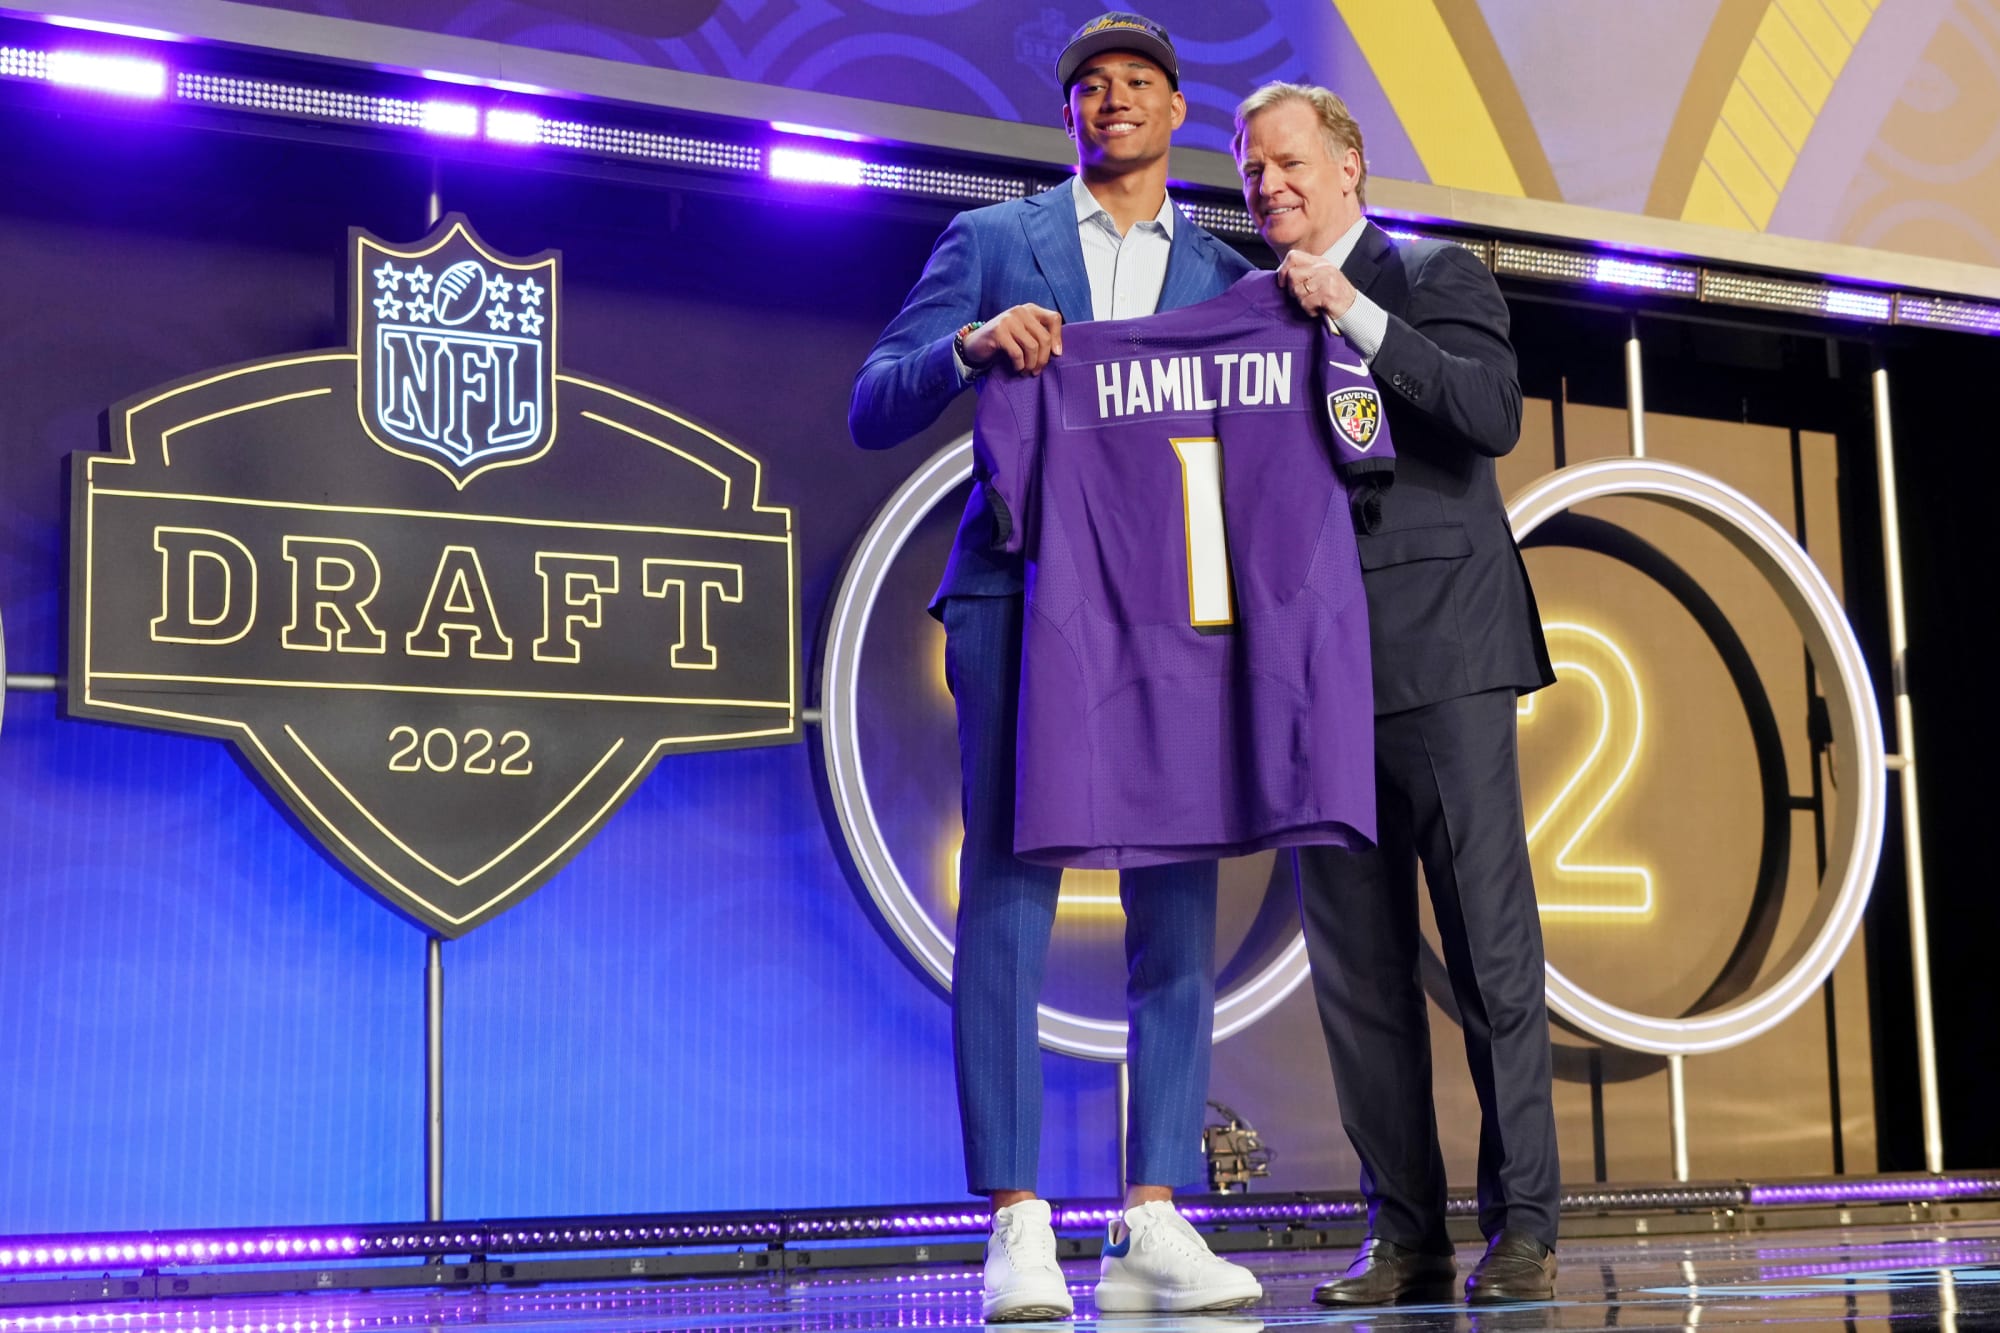 Ravens receiving universal praise for A+ 2022 NFL Draft class